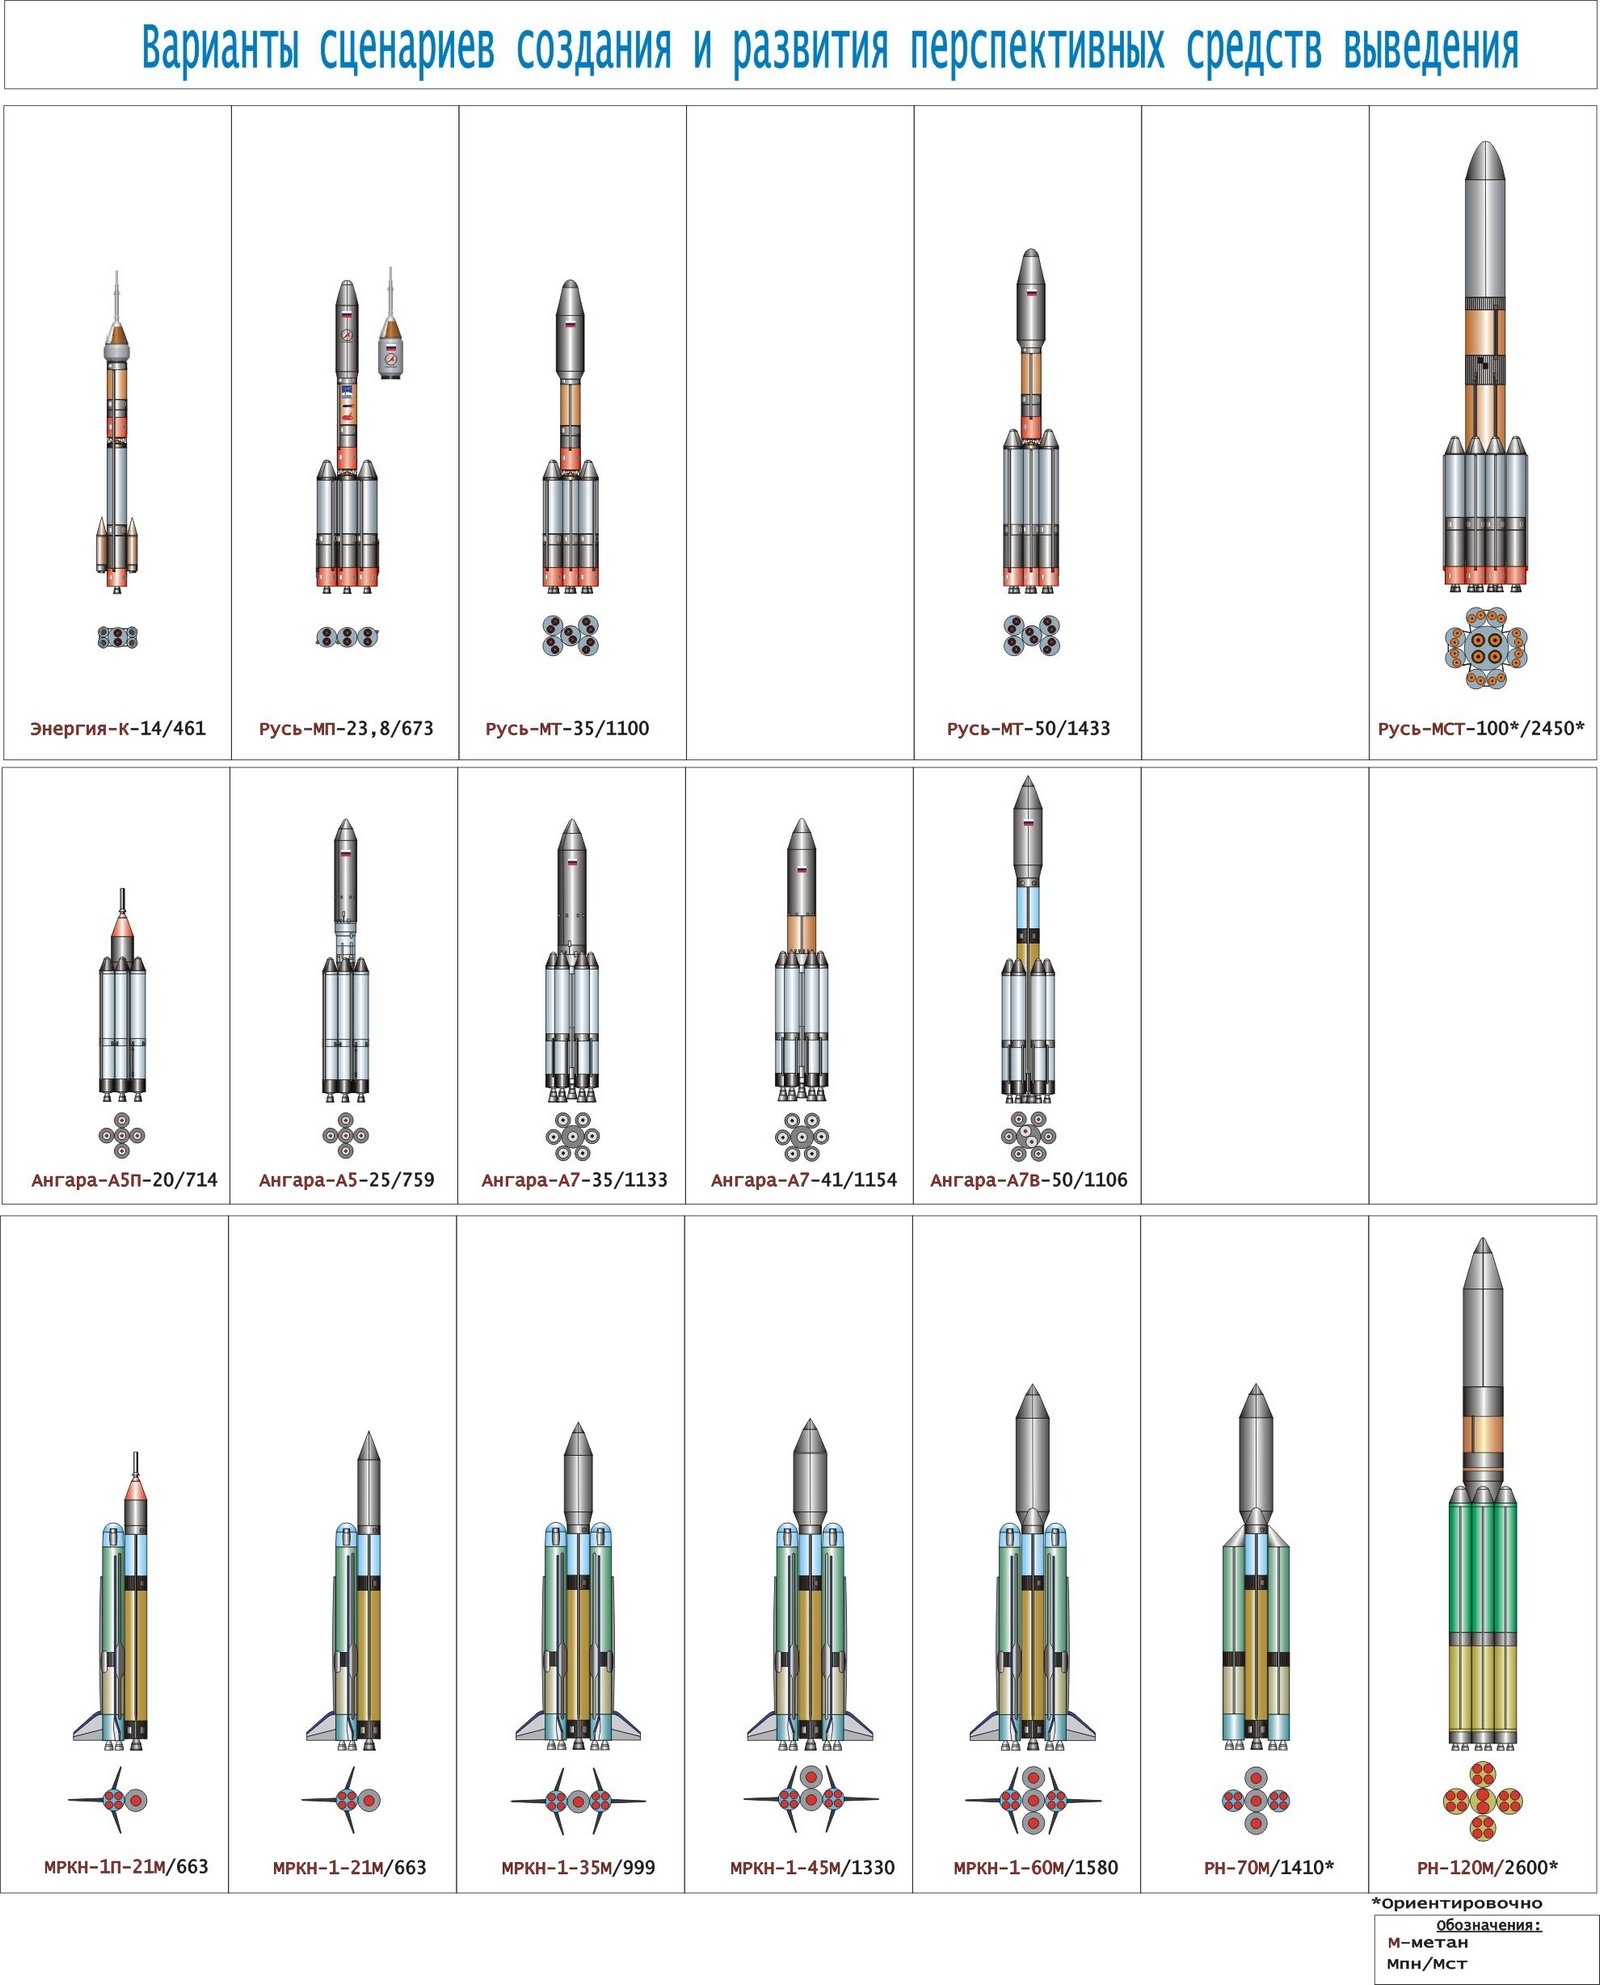 Ангара а5 размеры. Ангара а5 чертеж. Ракета-носитель "Ангара-а5". Ур-700 ракета-носитель. Ракета Ангара а5 чертеж.